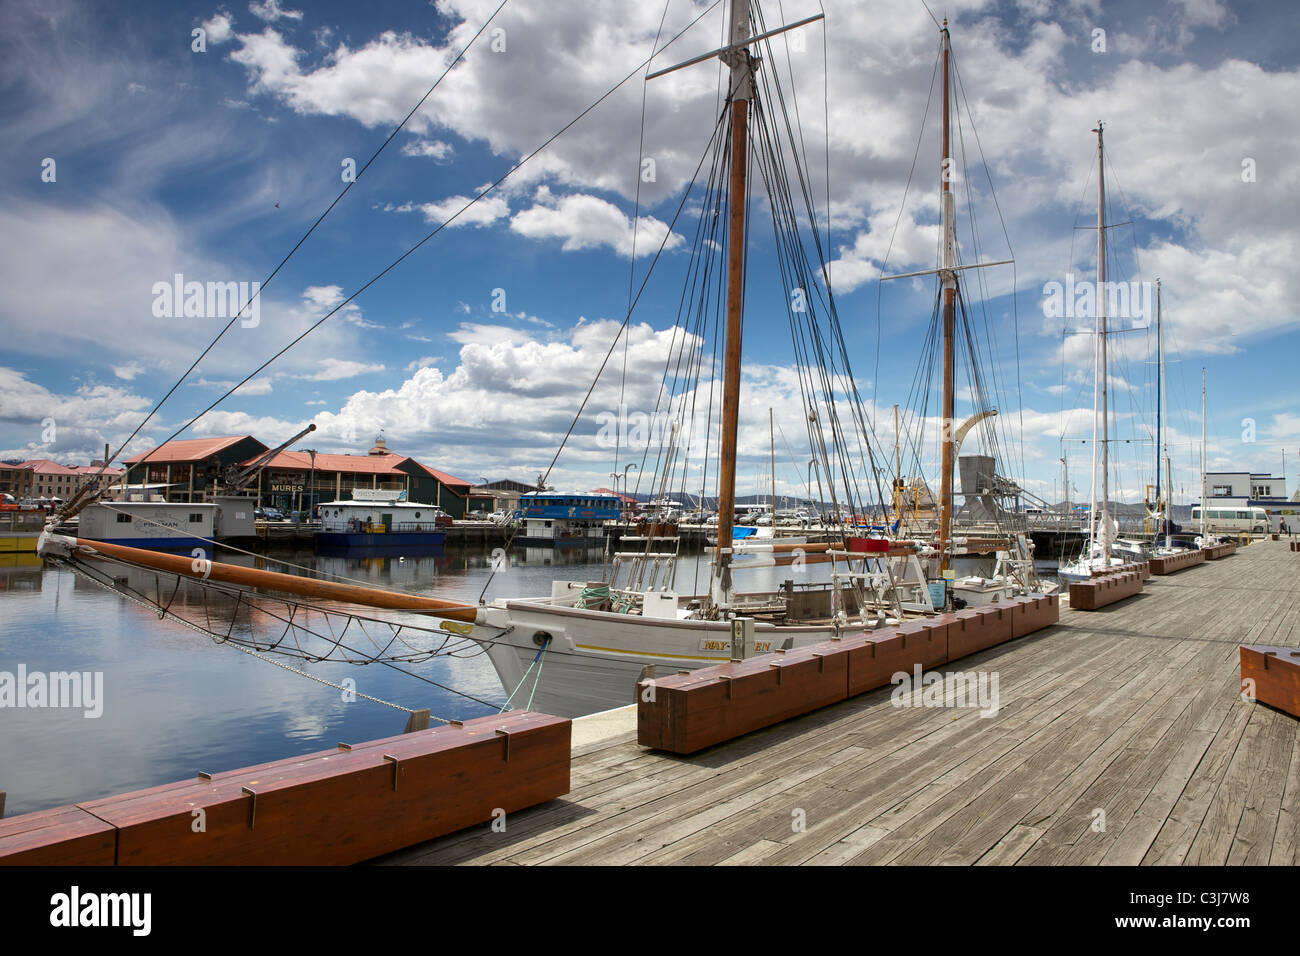 Stadt Hobart in Tasmanien, Australien. Beginn des Sommers 2010 Stockfoto